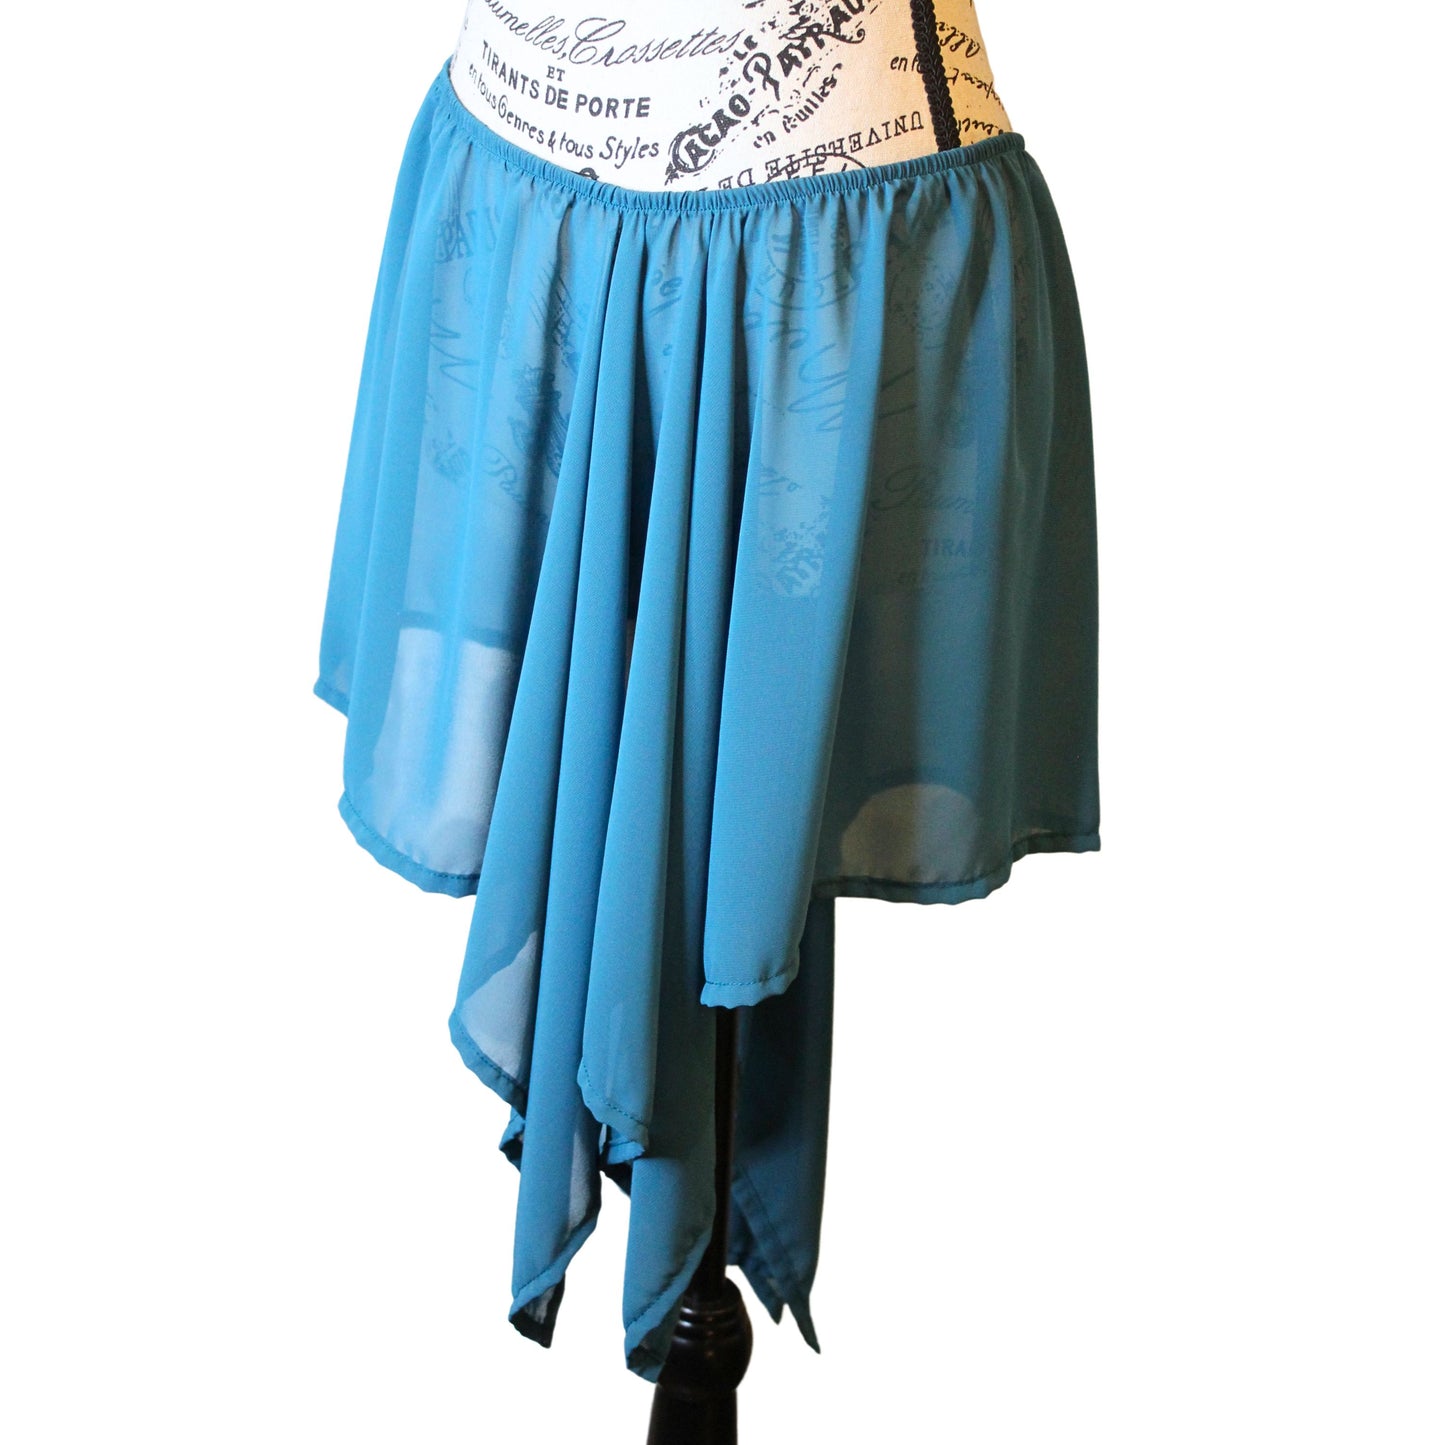 The VM Chiffon Asymmetrical Skirt